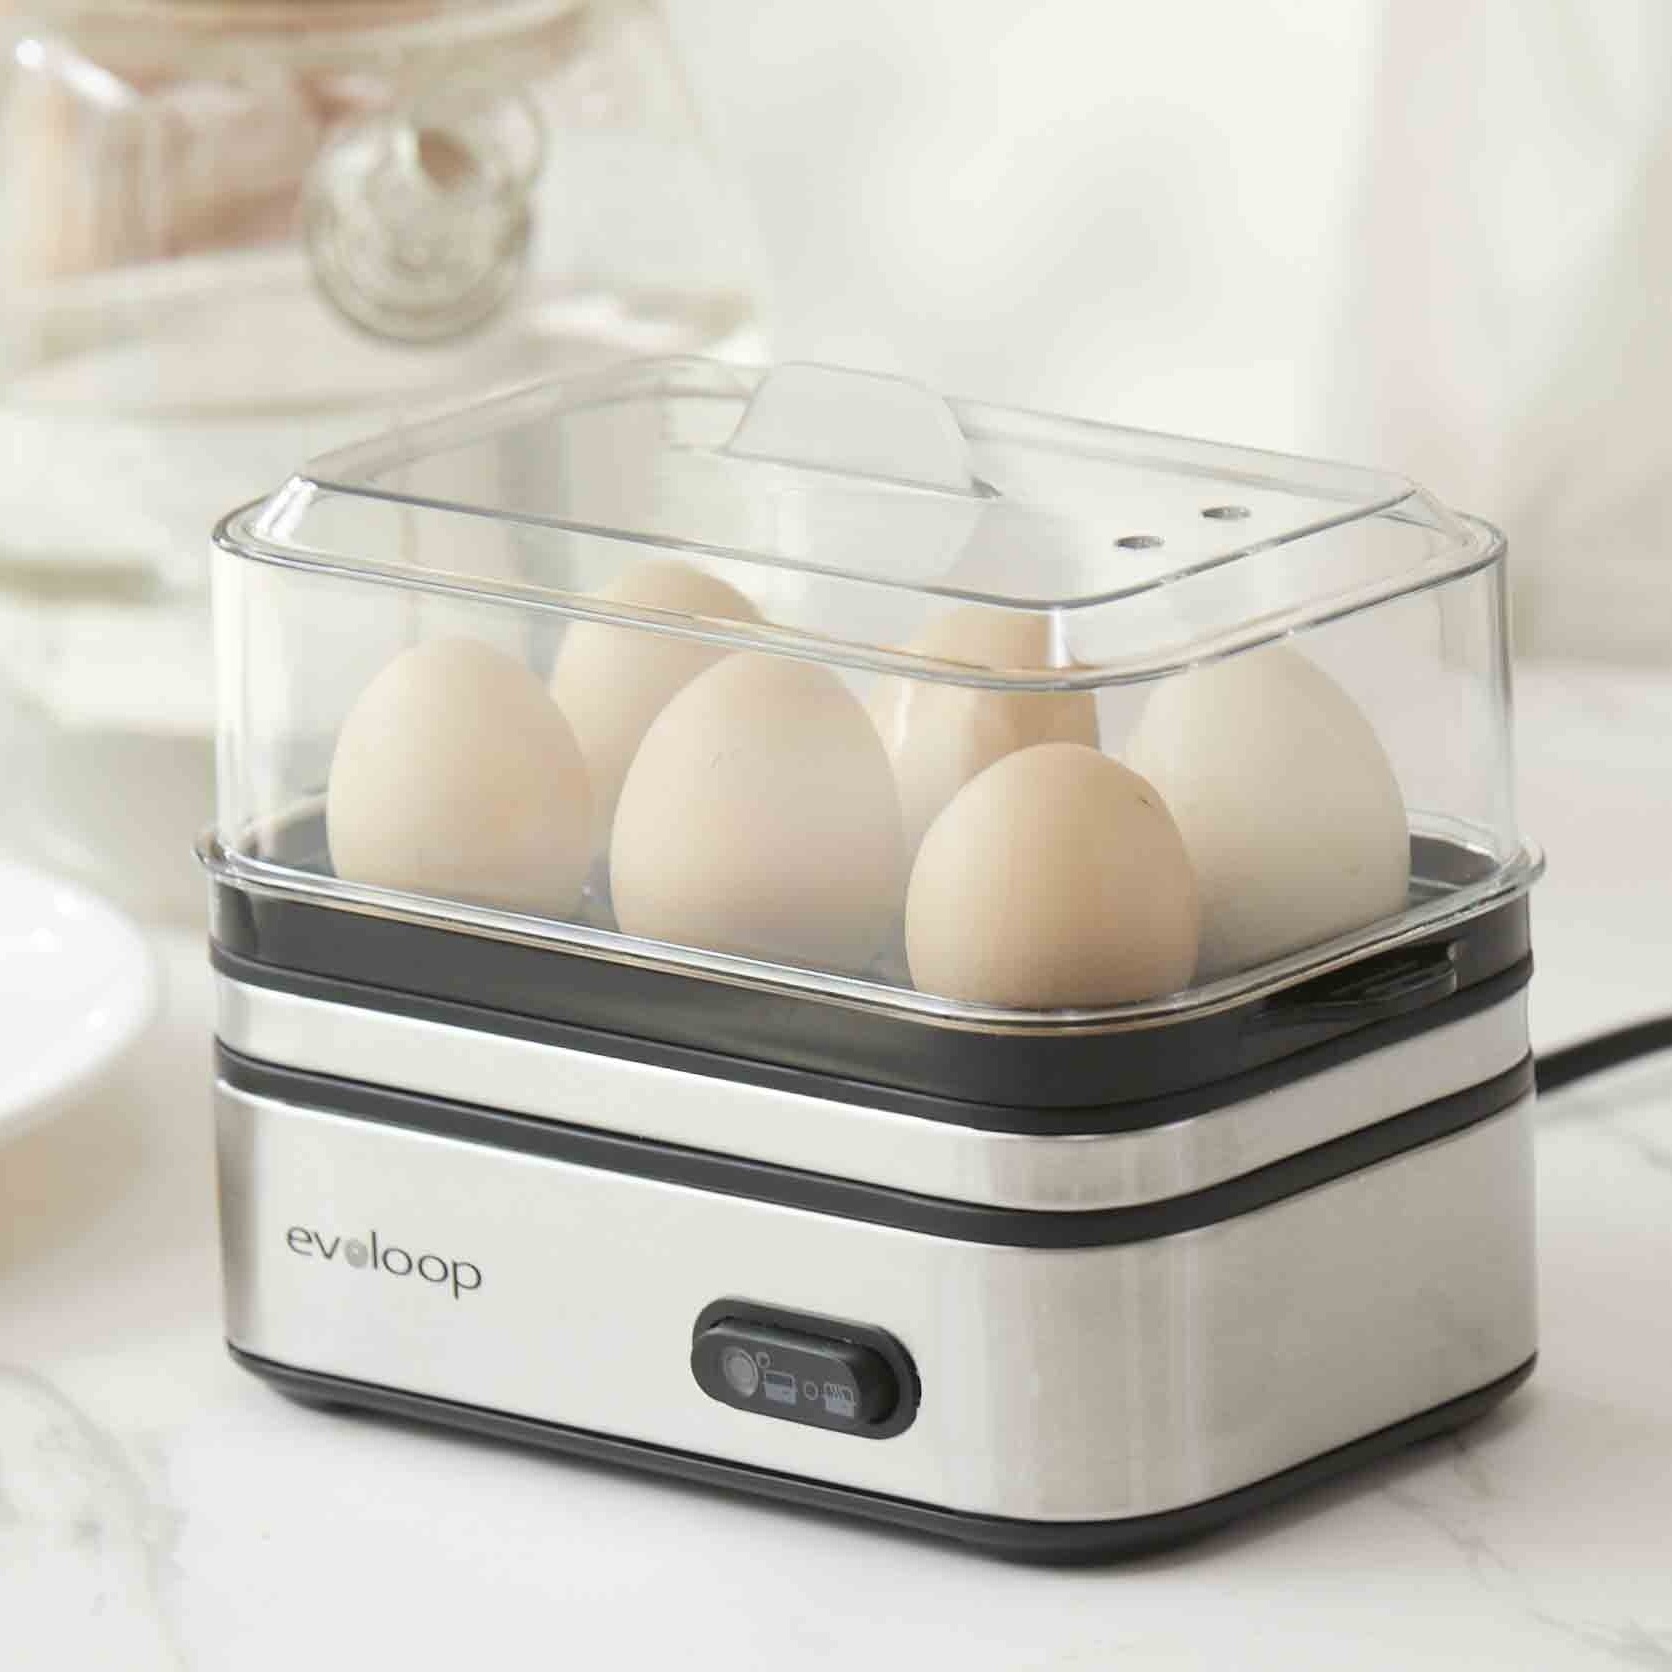  Evoloop Rapid Egg Cooker Electric 6 Eggs Capacity